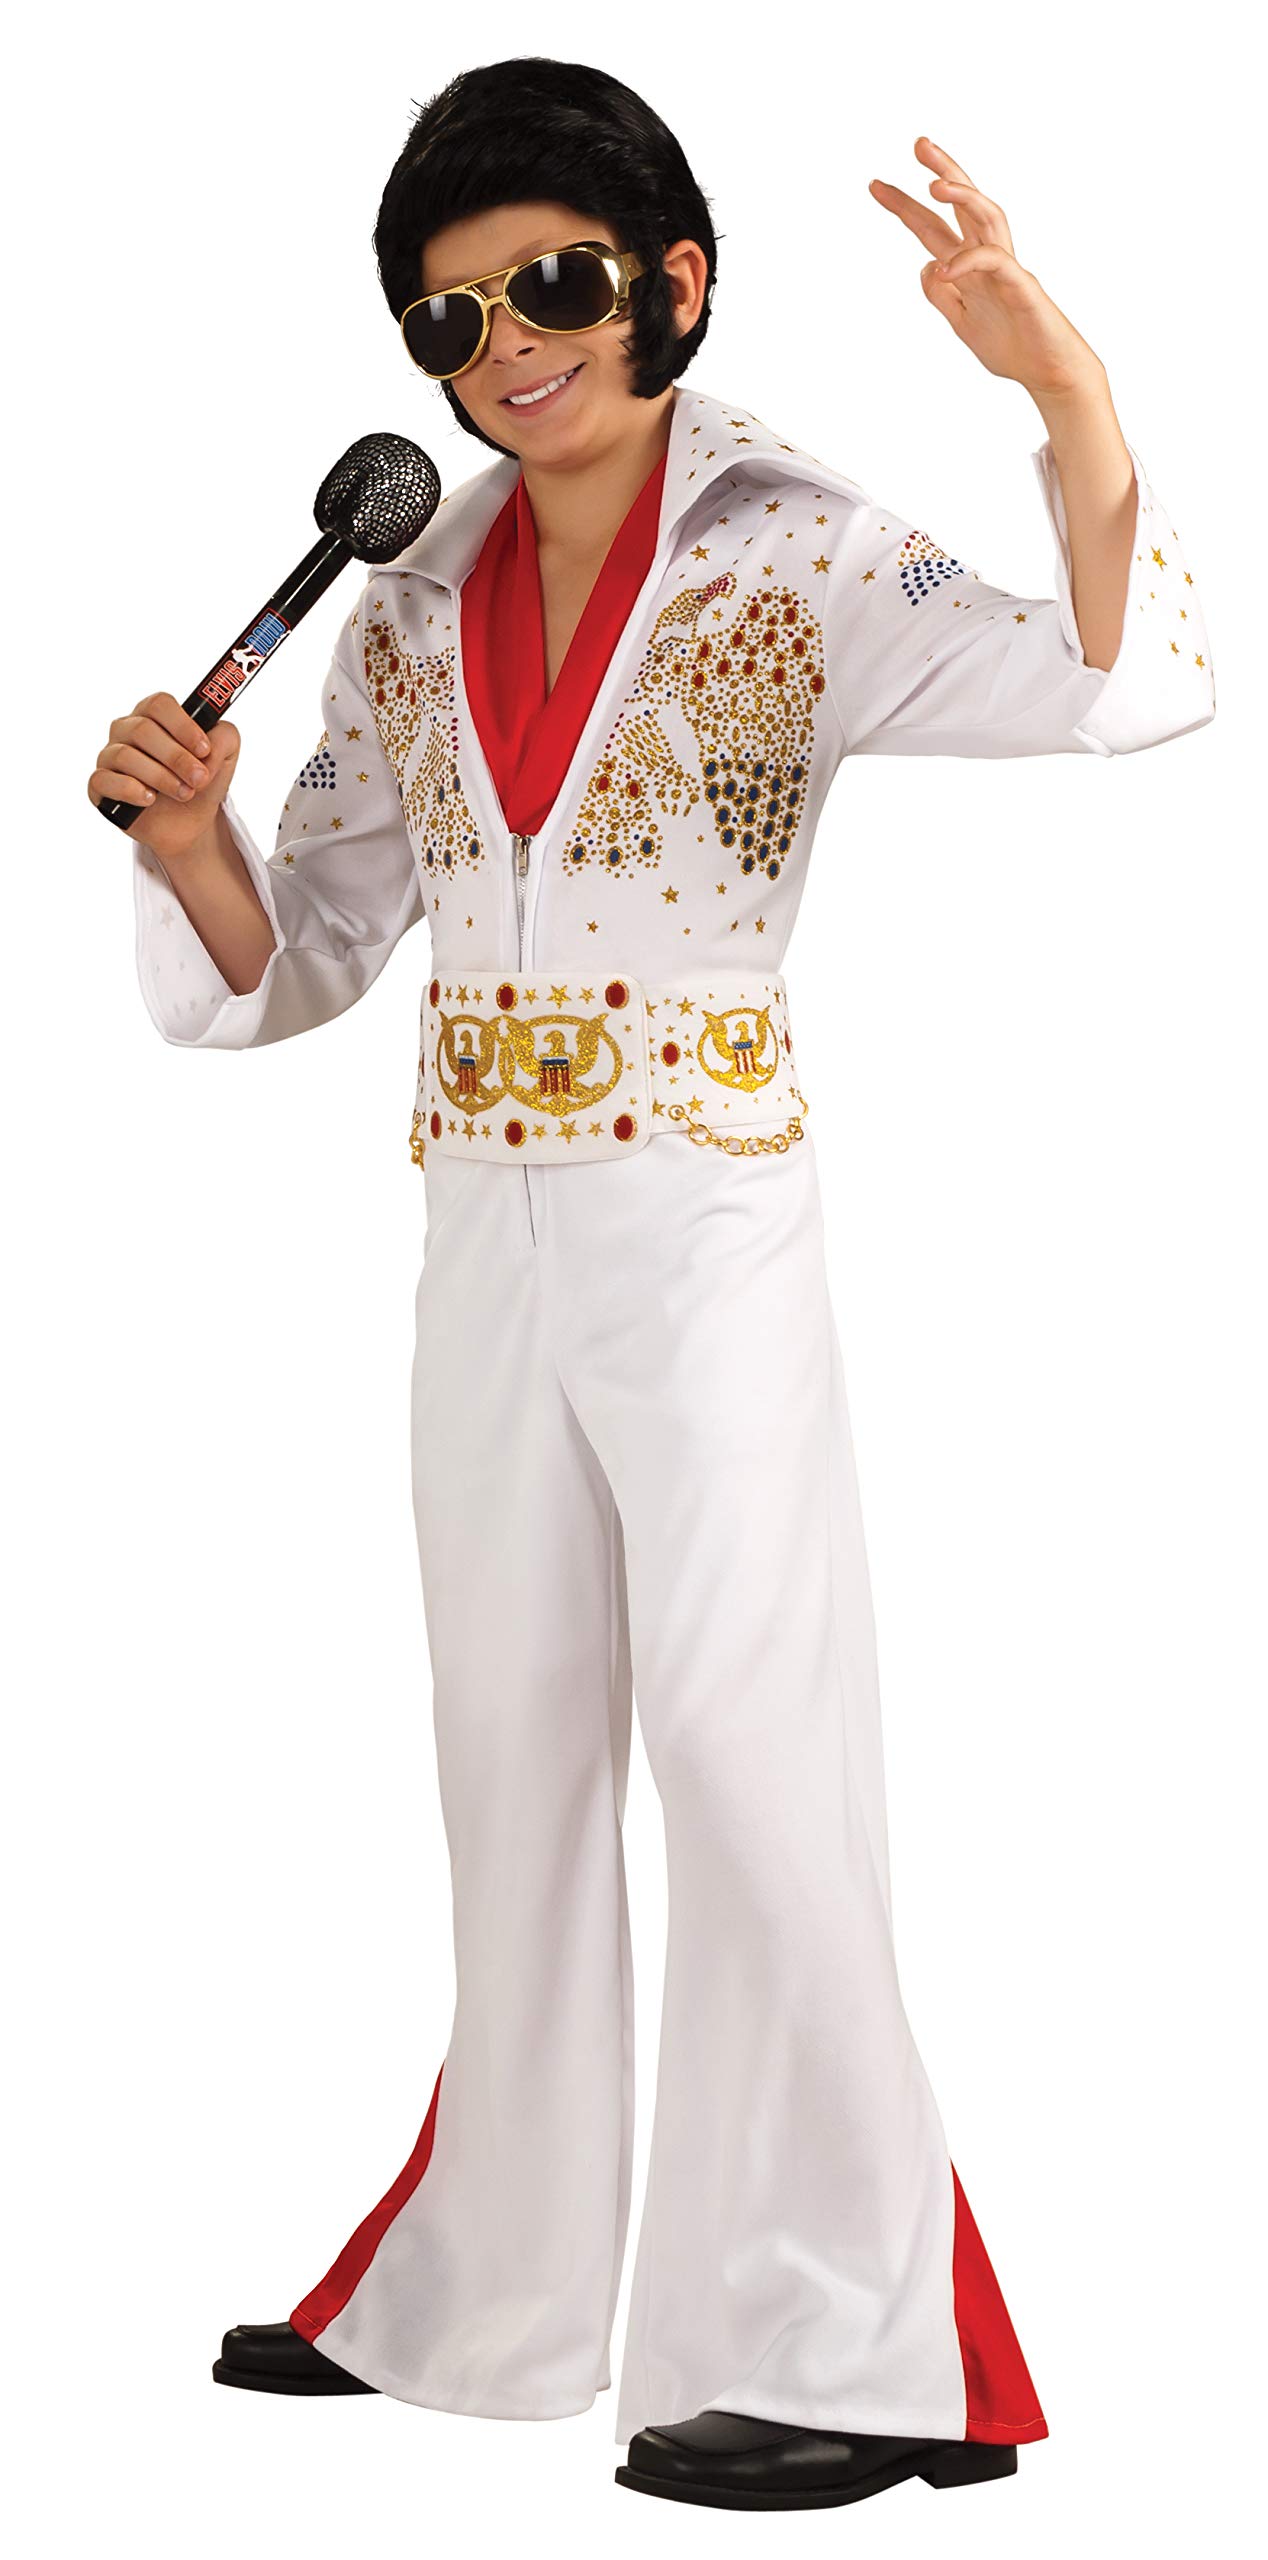 Rubies Child's Deluxe Elvis Costume